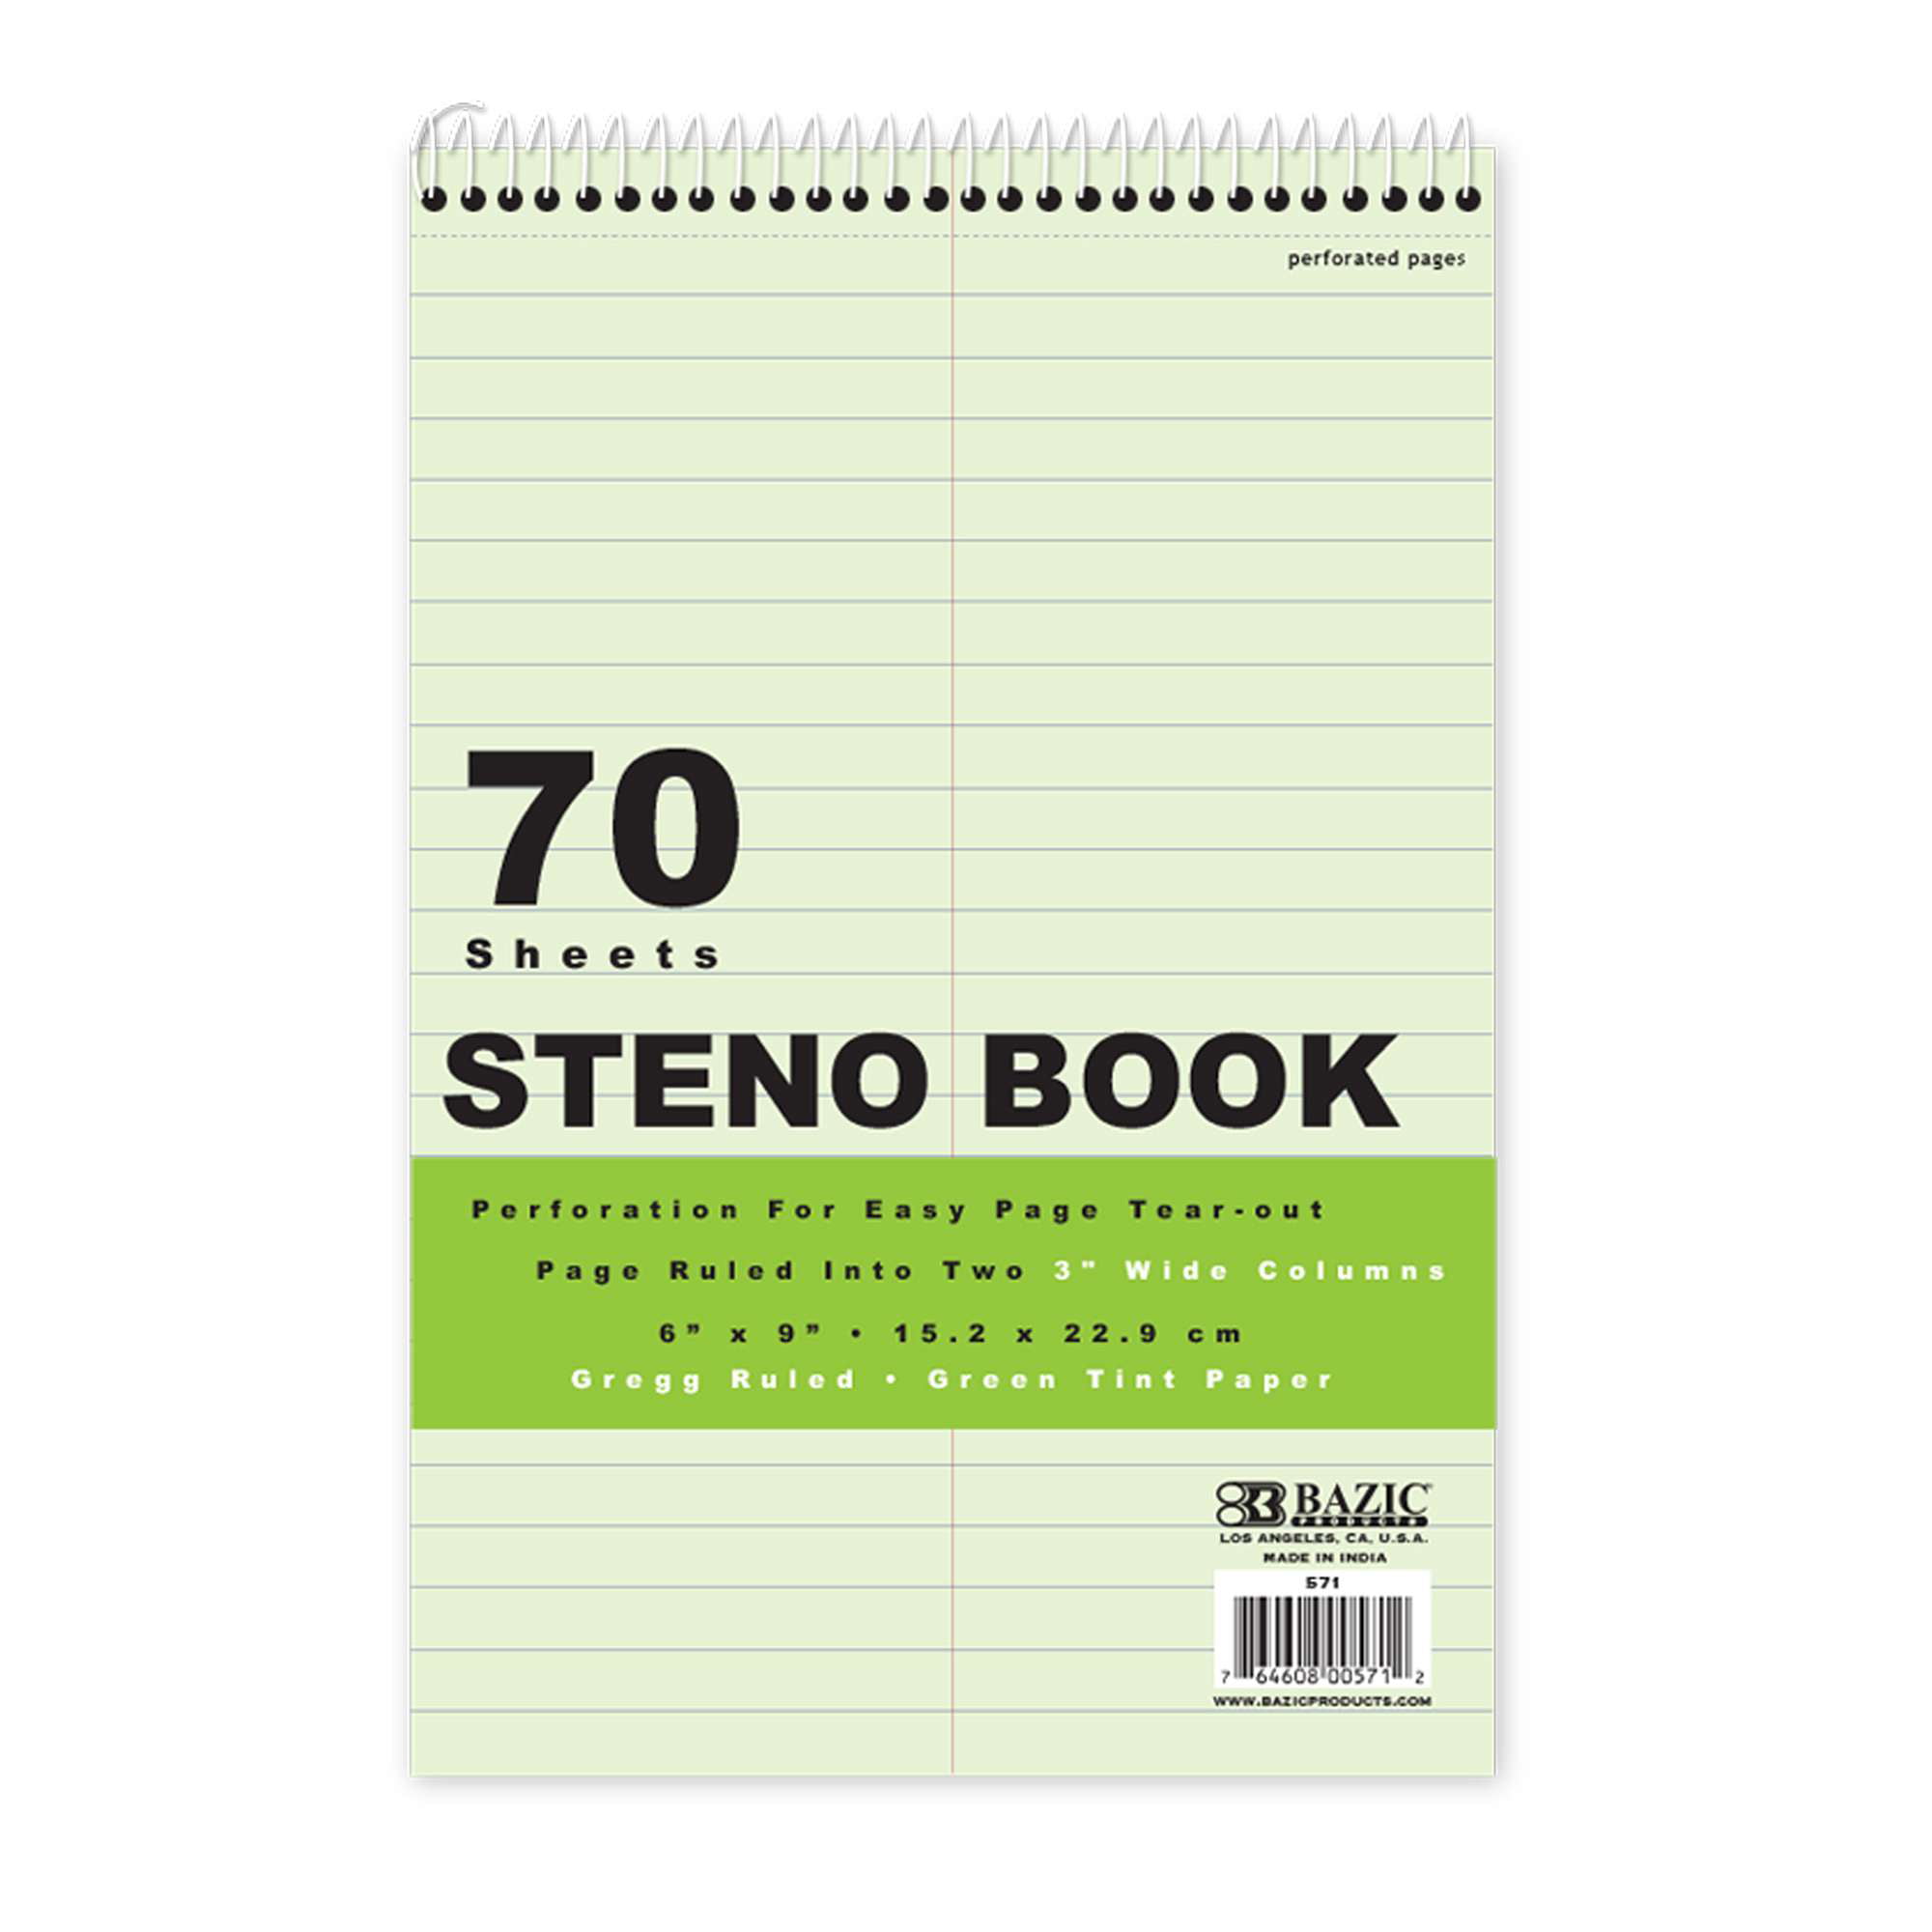 80 Sheets 31931 Staples Steno book 6 x 9 Dozen Assorted Colors Gregg Ruled 